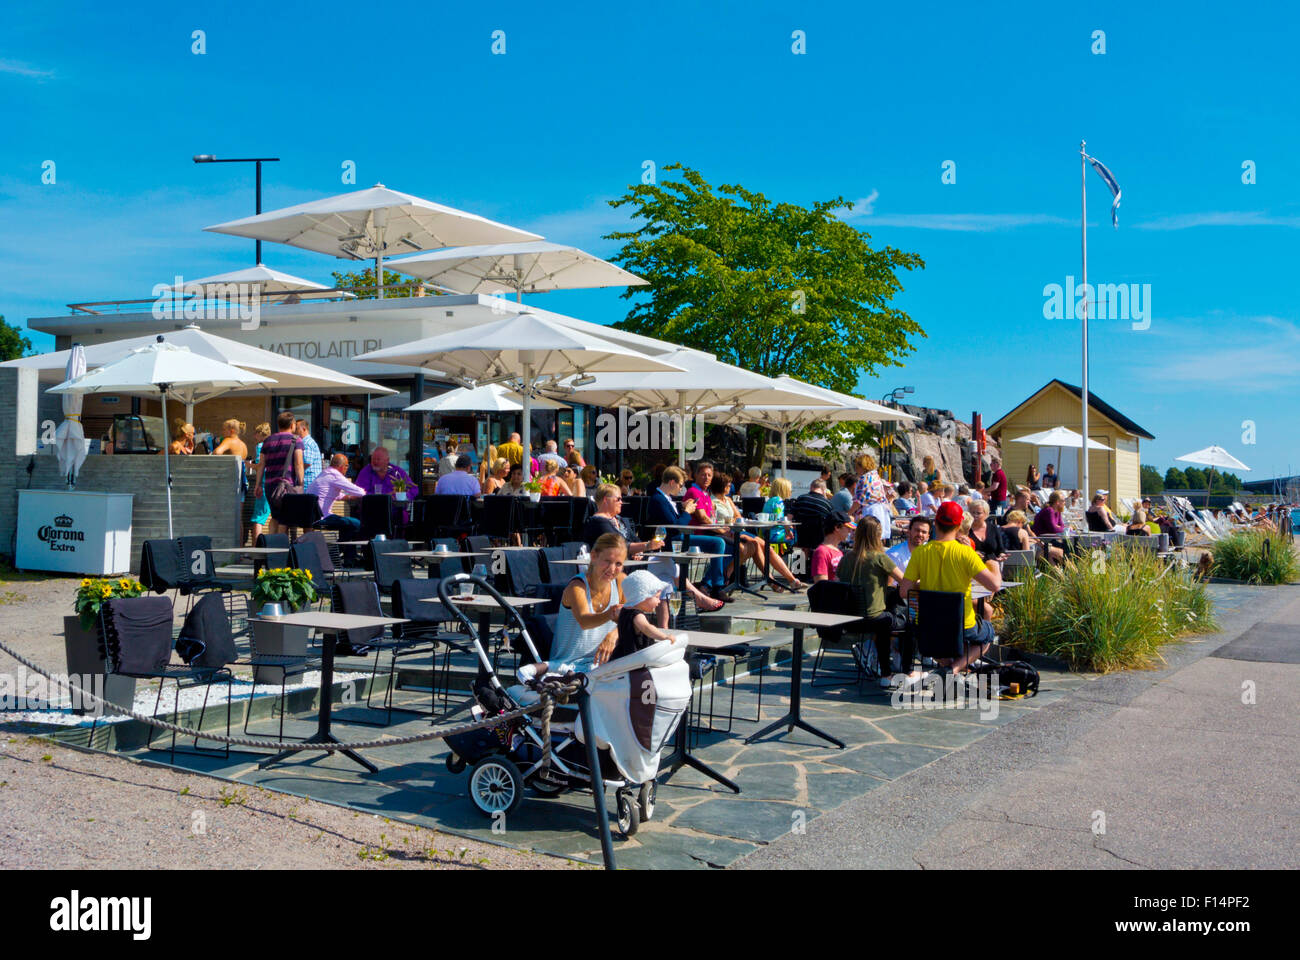 Mattolaituri, summertime cafe, bar and restaurant, in front of Kaivopuisto park, Helsinki, Finland Stock Photo